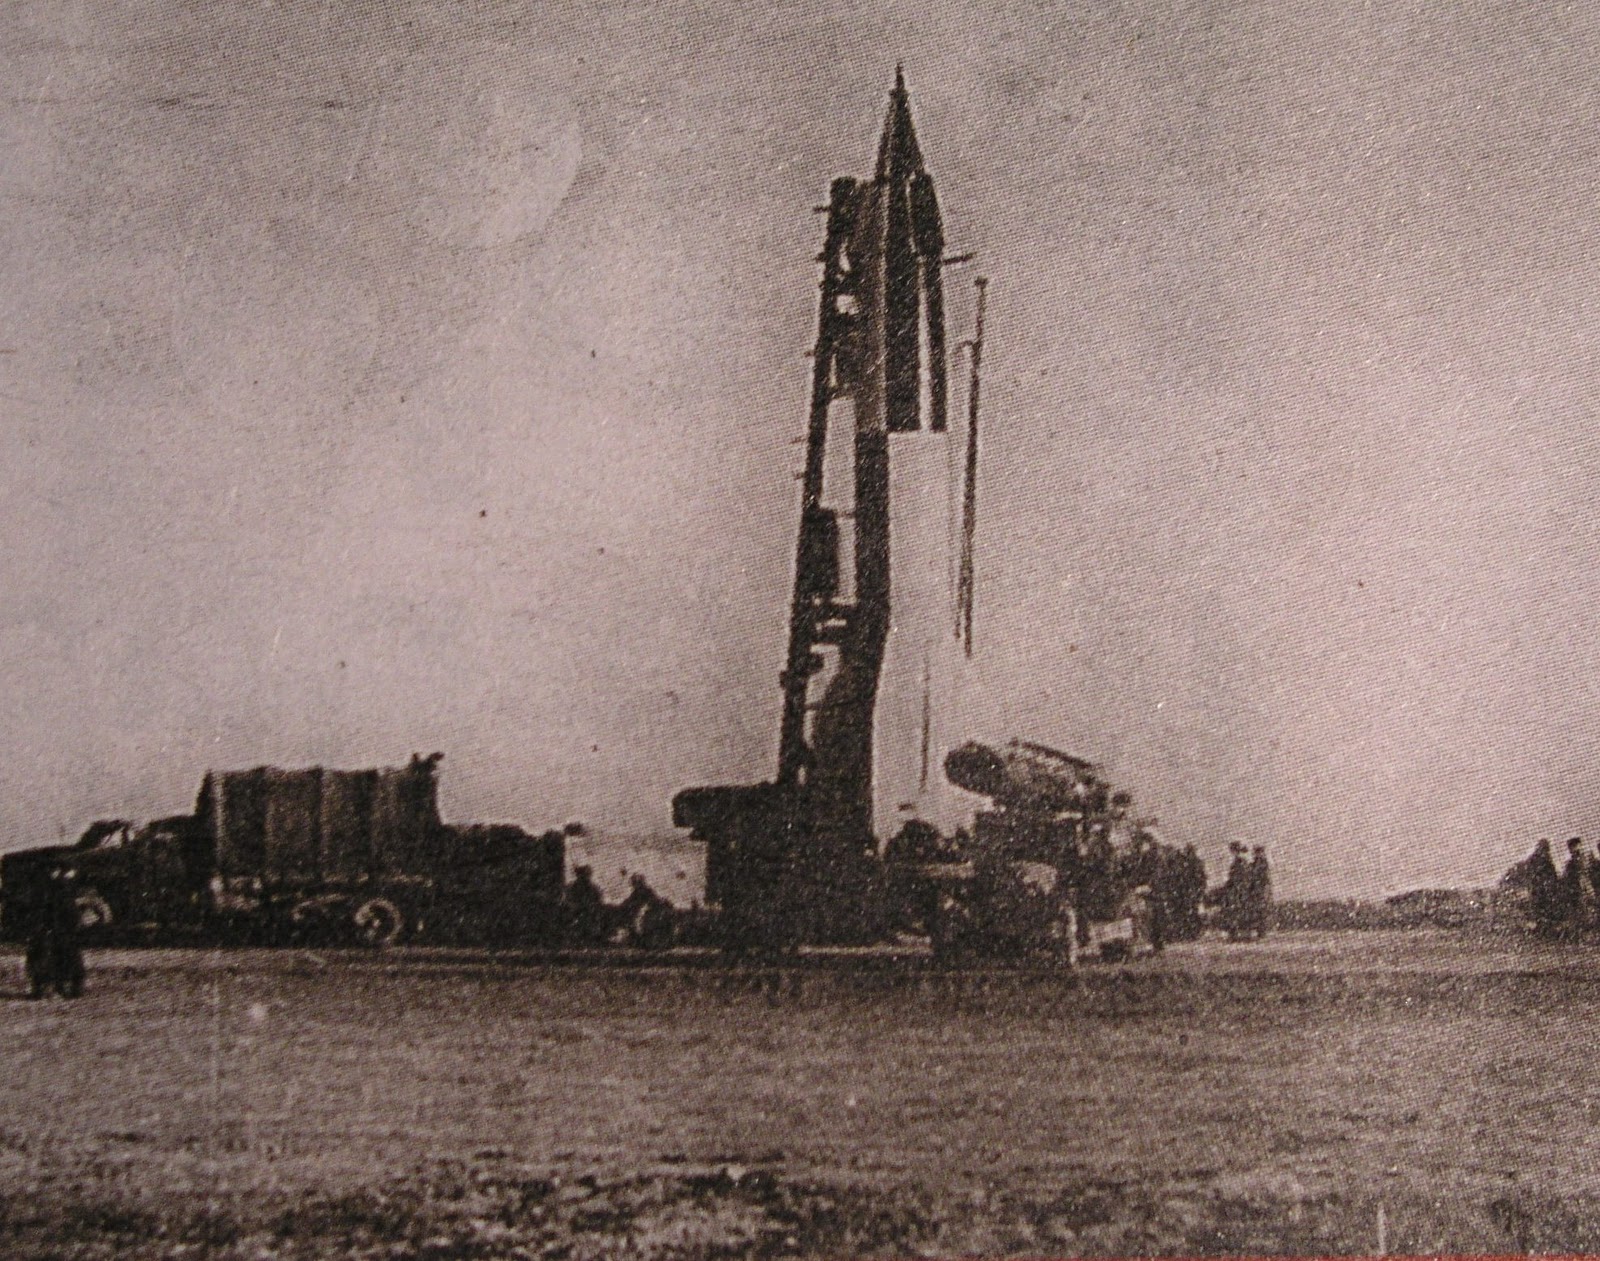 Самая первая баллистическая ракета. ФАУ-2 баллистическая ракета. Капустин Яр ракета р1. Баллистическая ракета р-1 Королев. Капустин Яр ракета р1 18.10.1947.